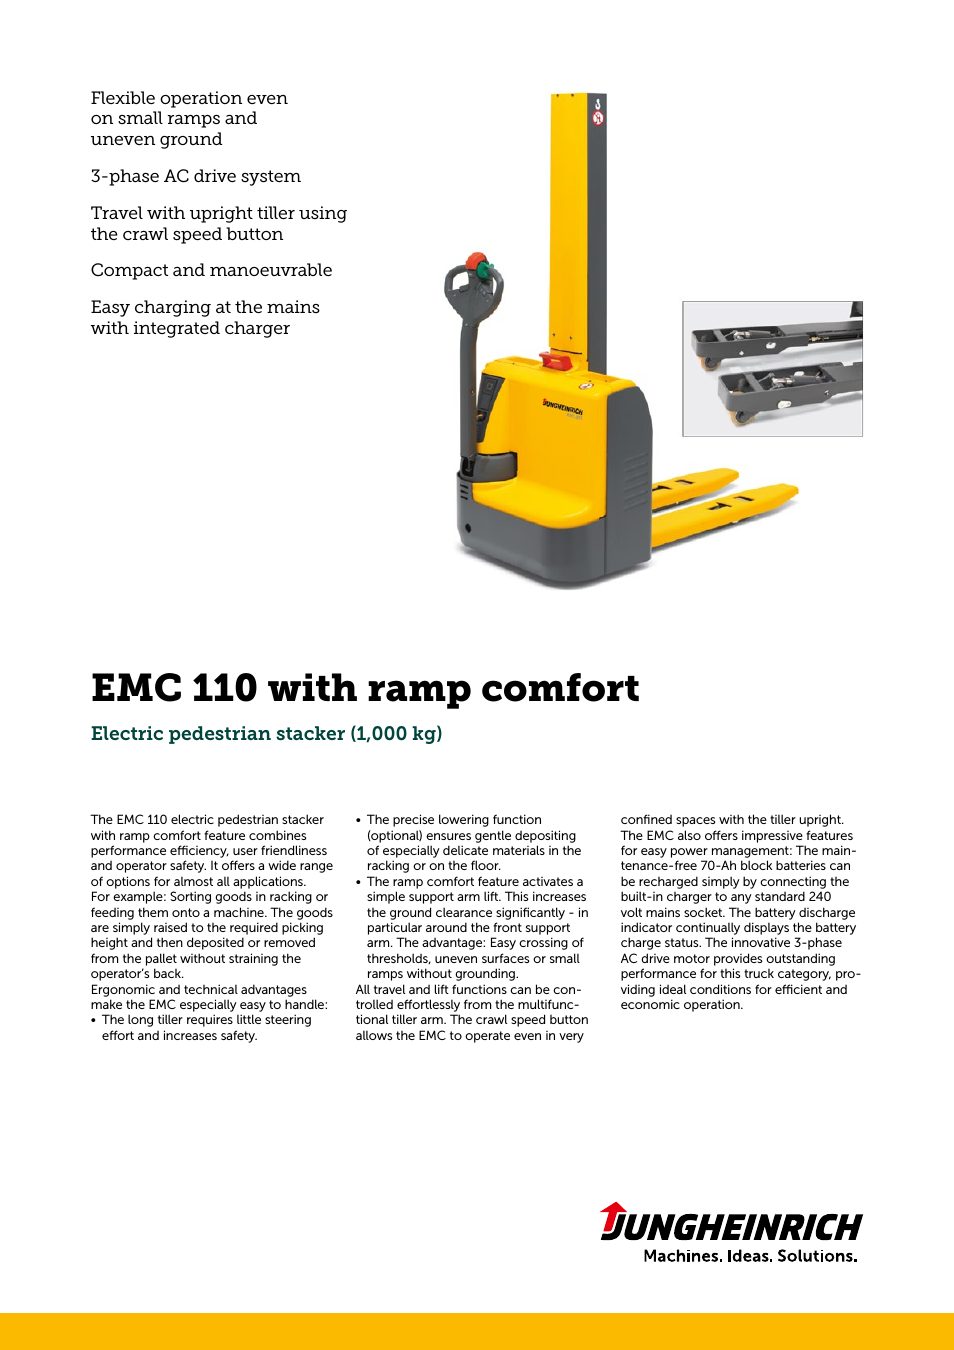 EMC_110 with ramp comfort